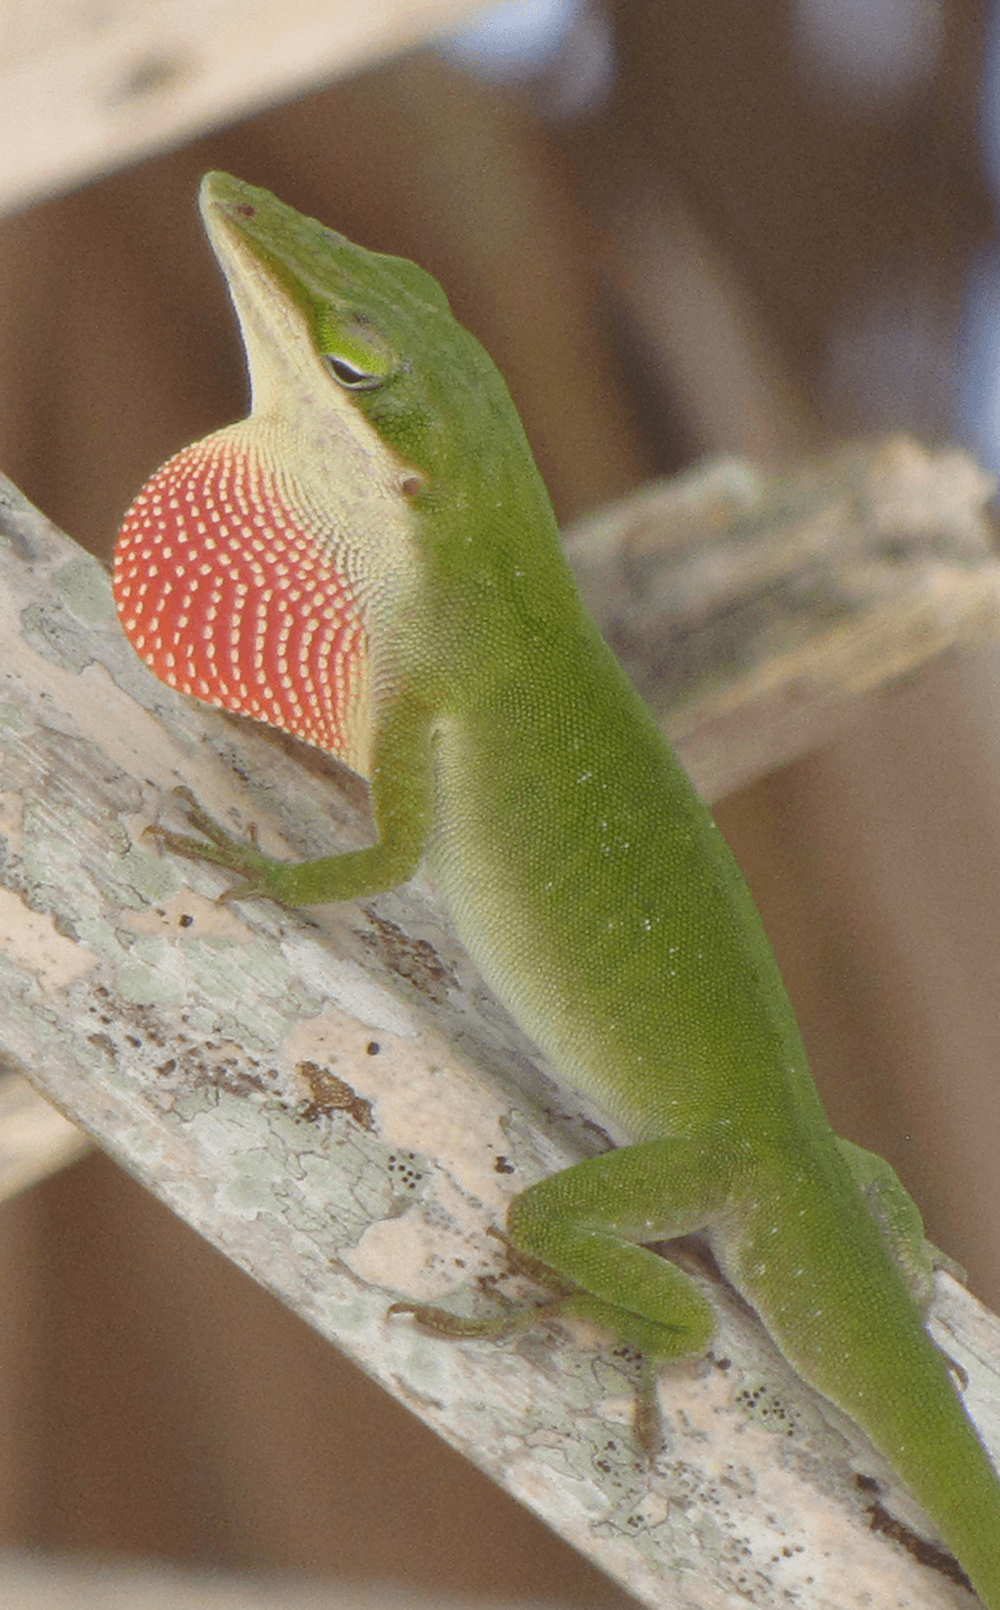 Invasive species trigger rapid evolution for lizards in Florida